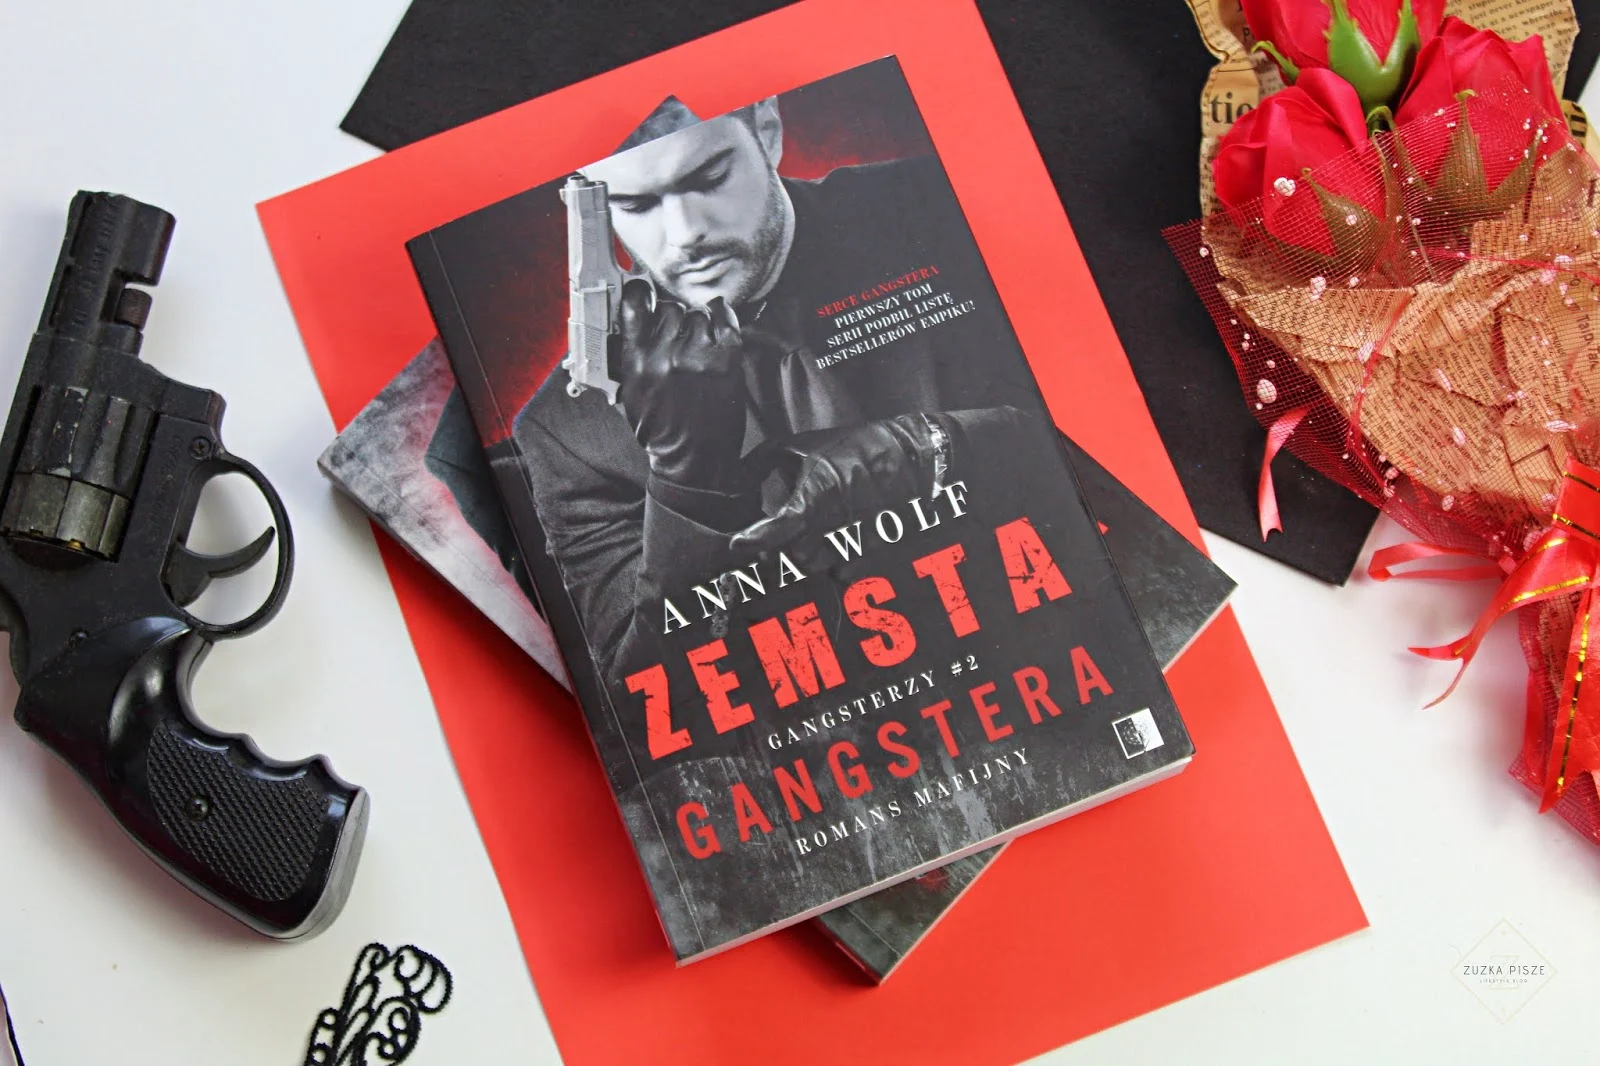 Anna Wolf  "Zemsta Gangstera" - recenzja